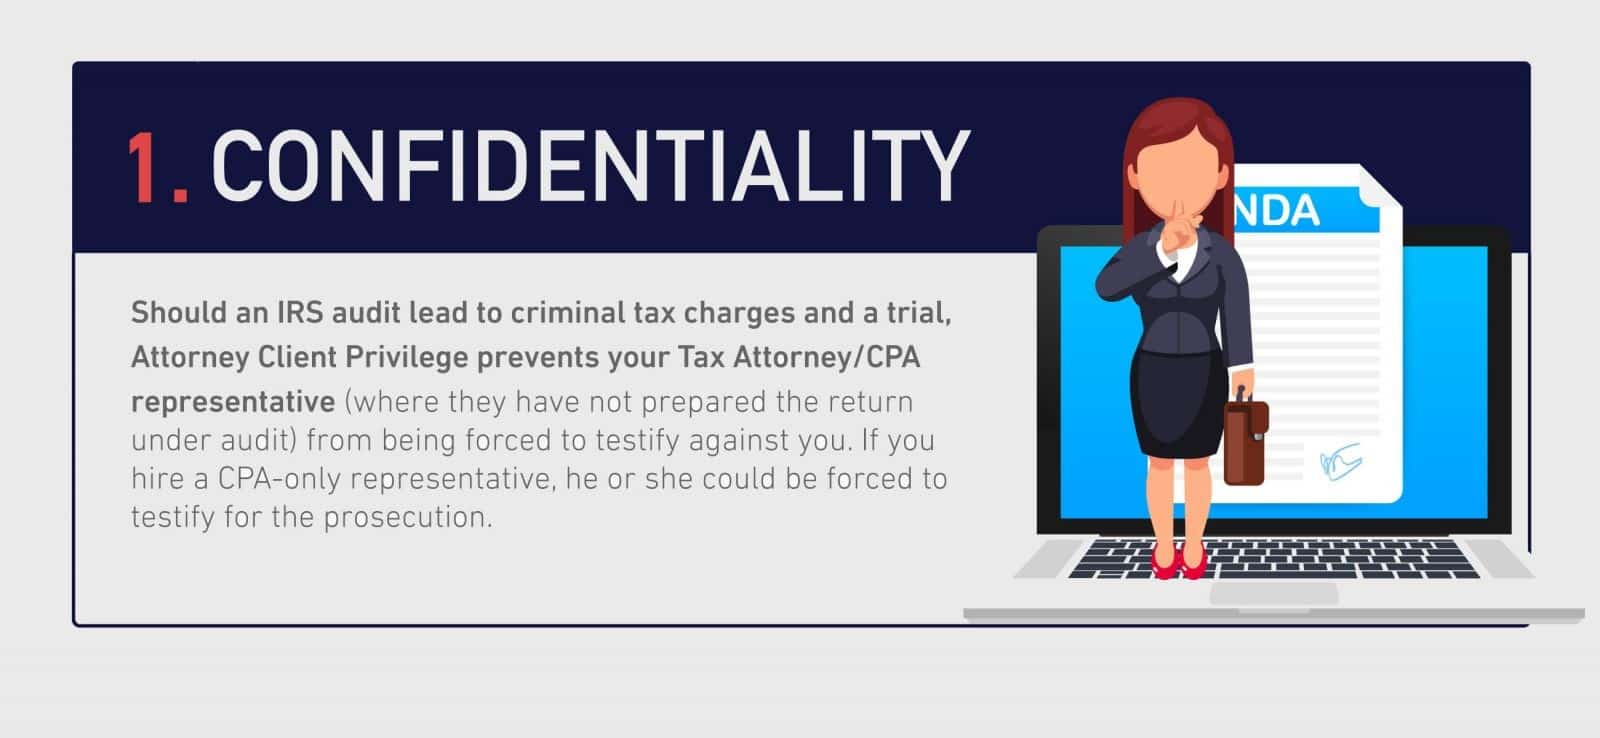 Confidentiality-klasing-associates-oakland-tax-attorney